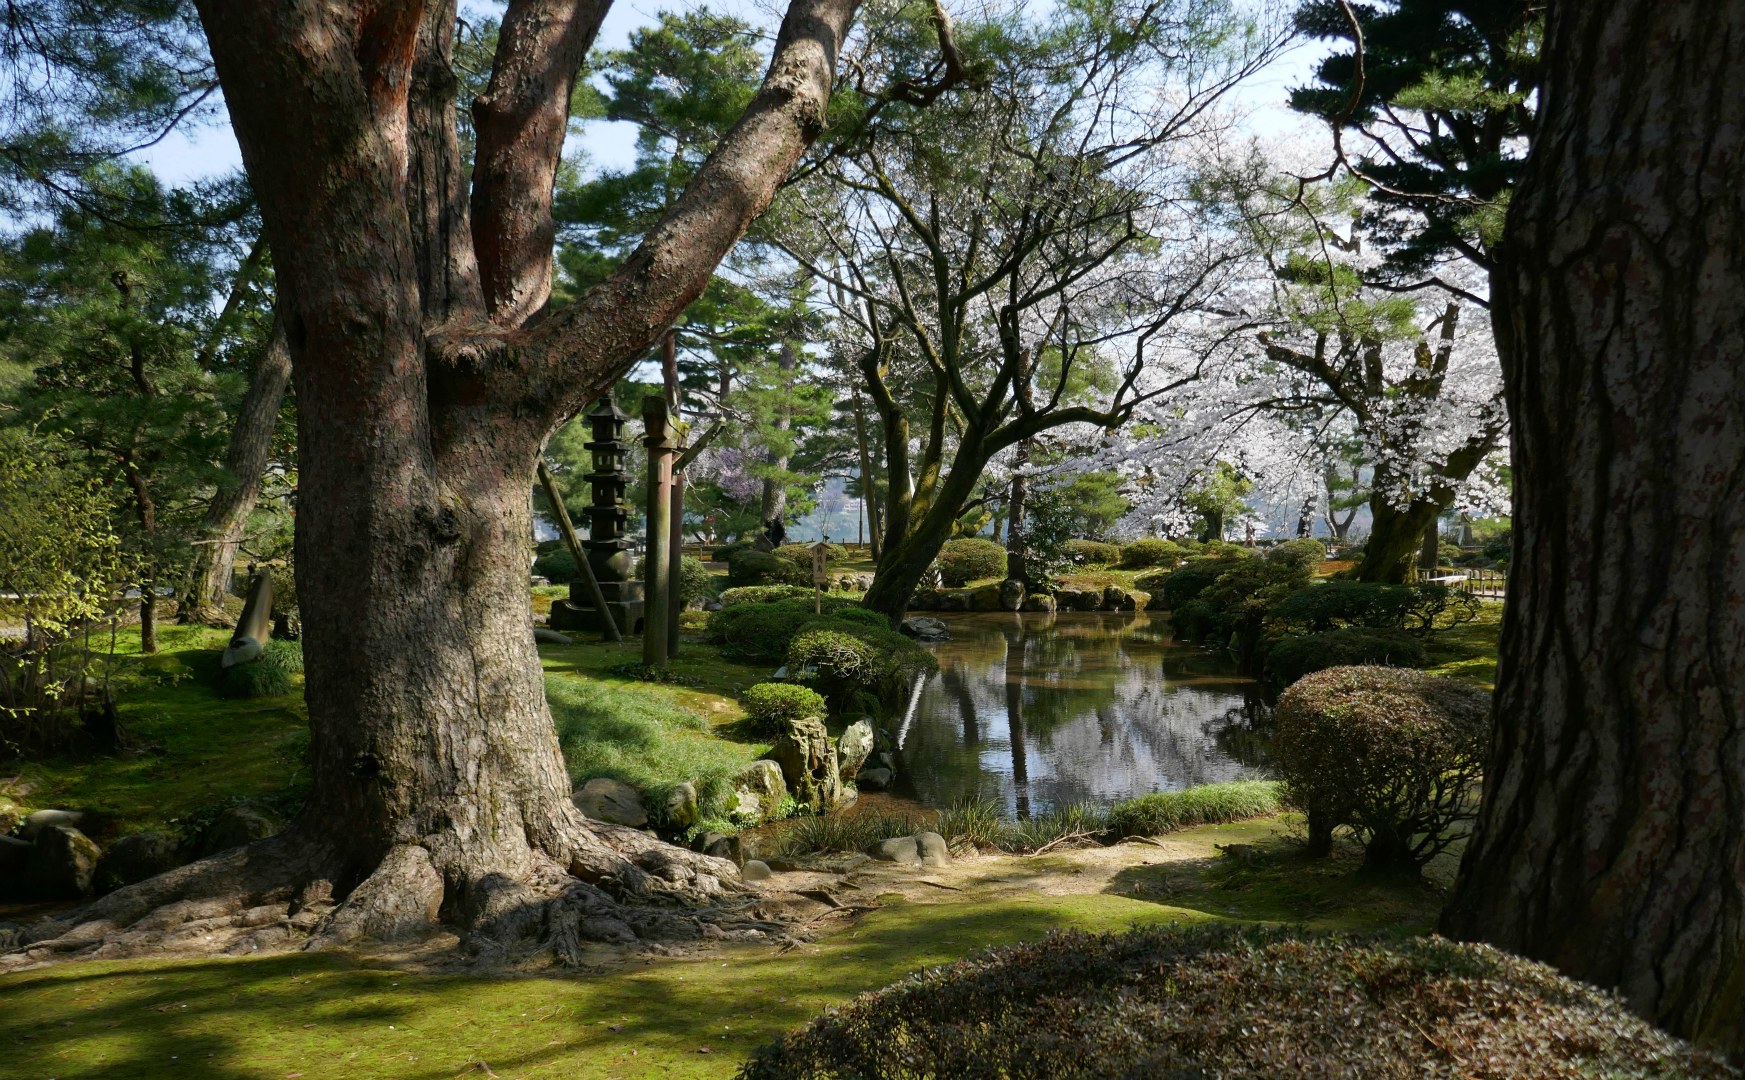 Kenroku-en Garden, Kanazawa